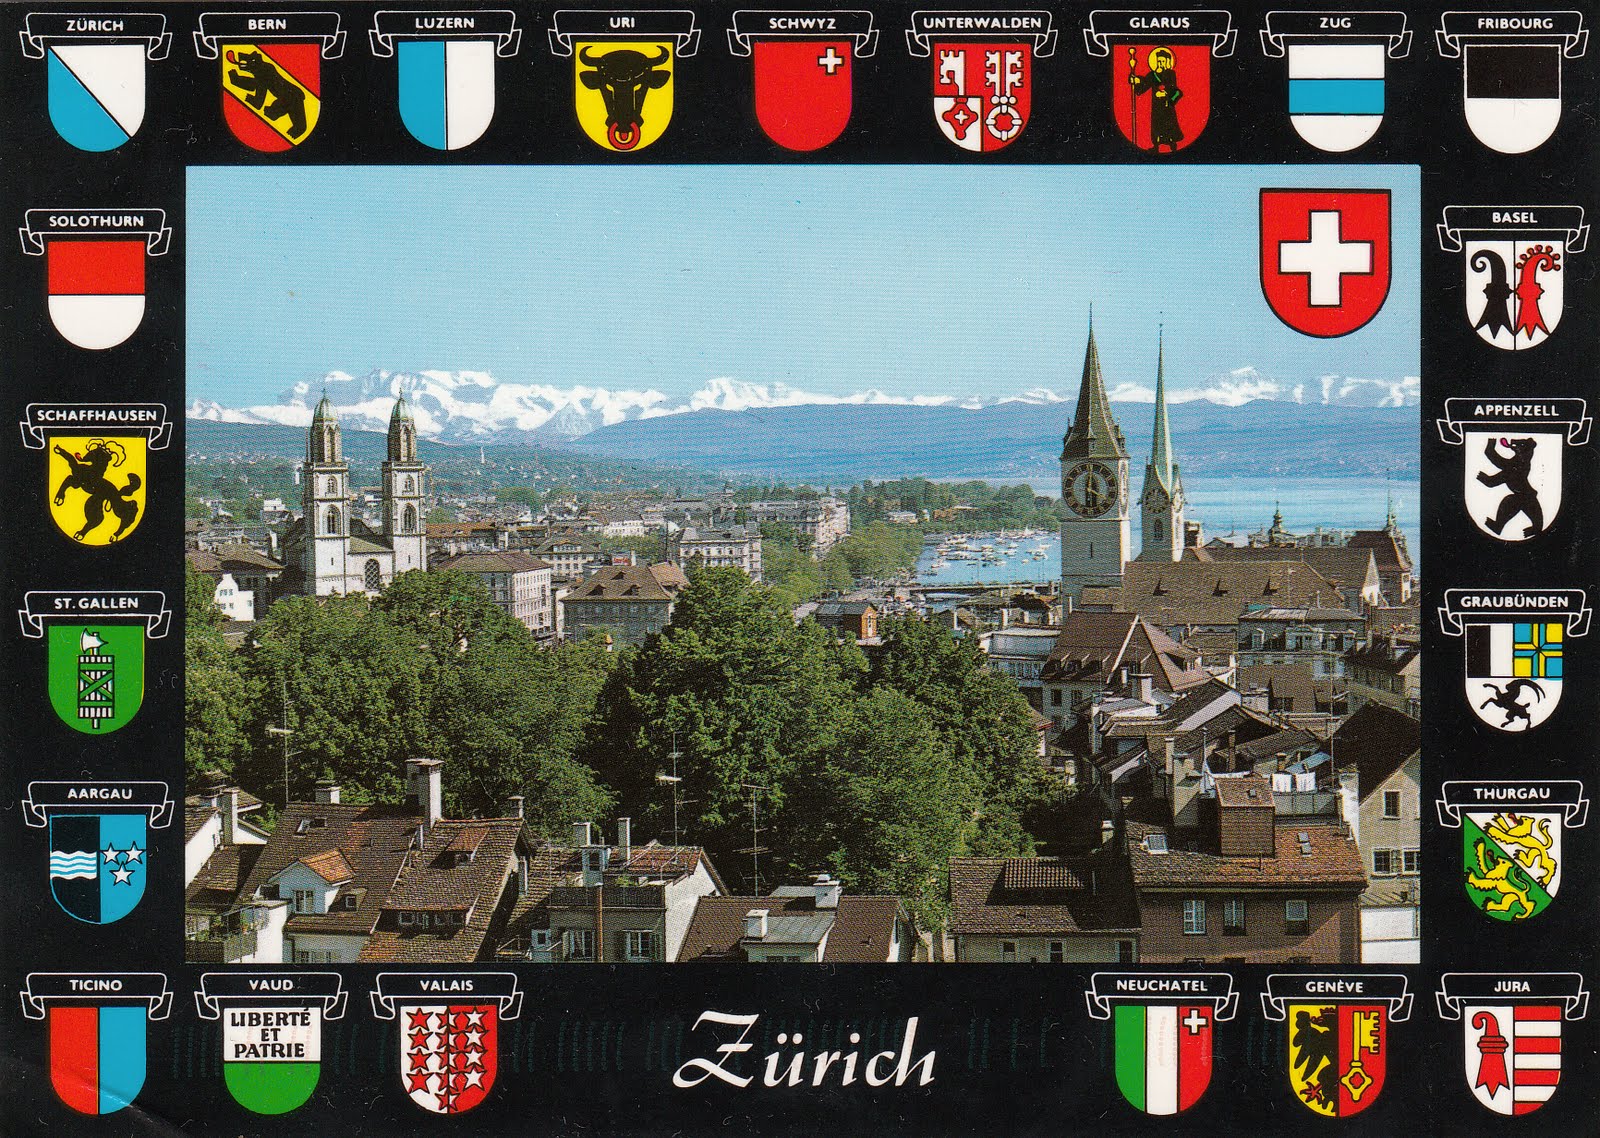 Postcards: My Window to the World!: Postcard from Switzerland